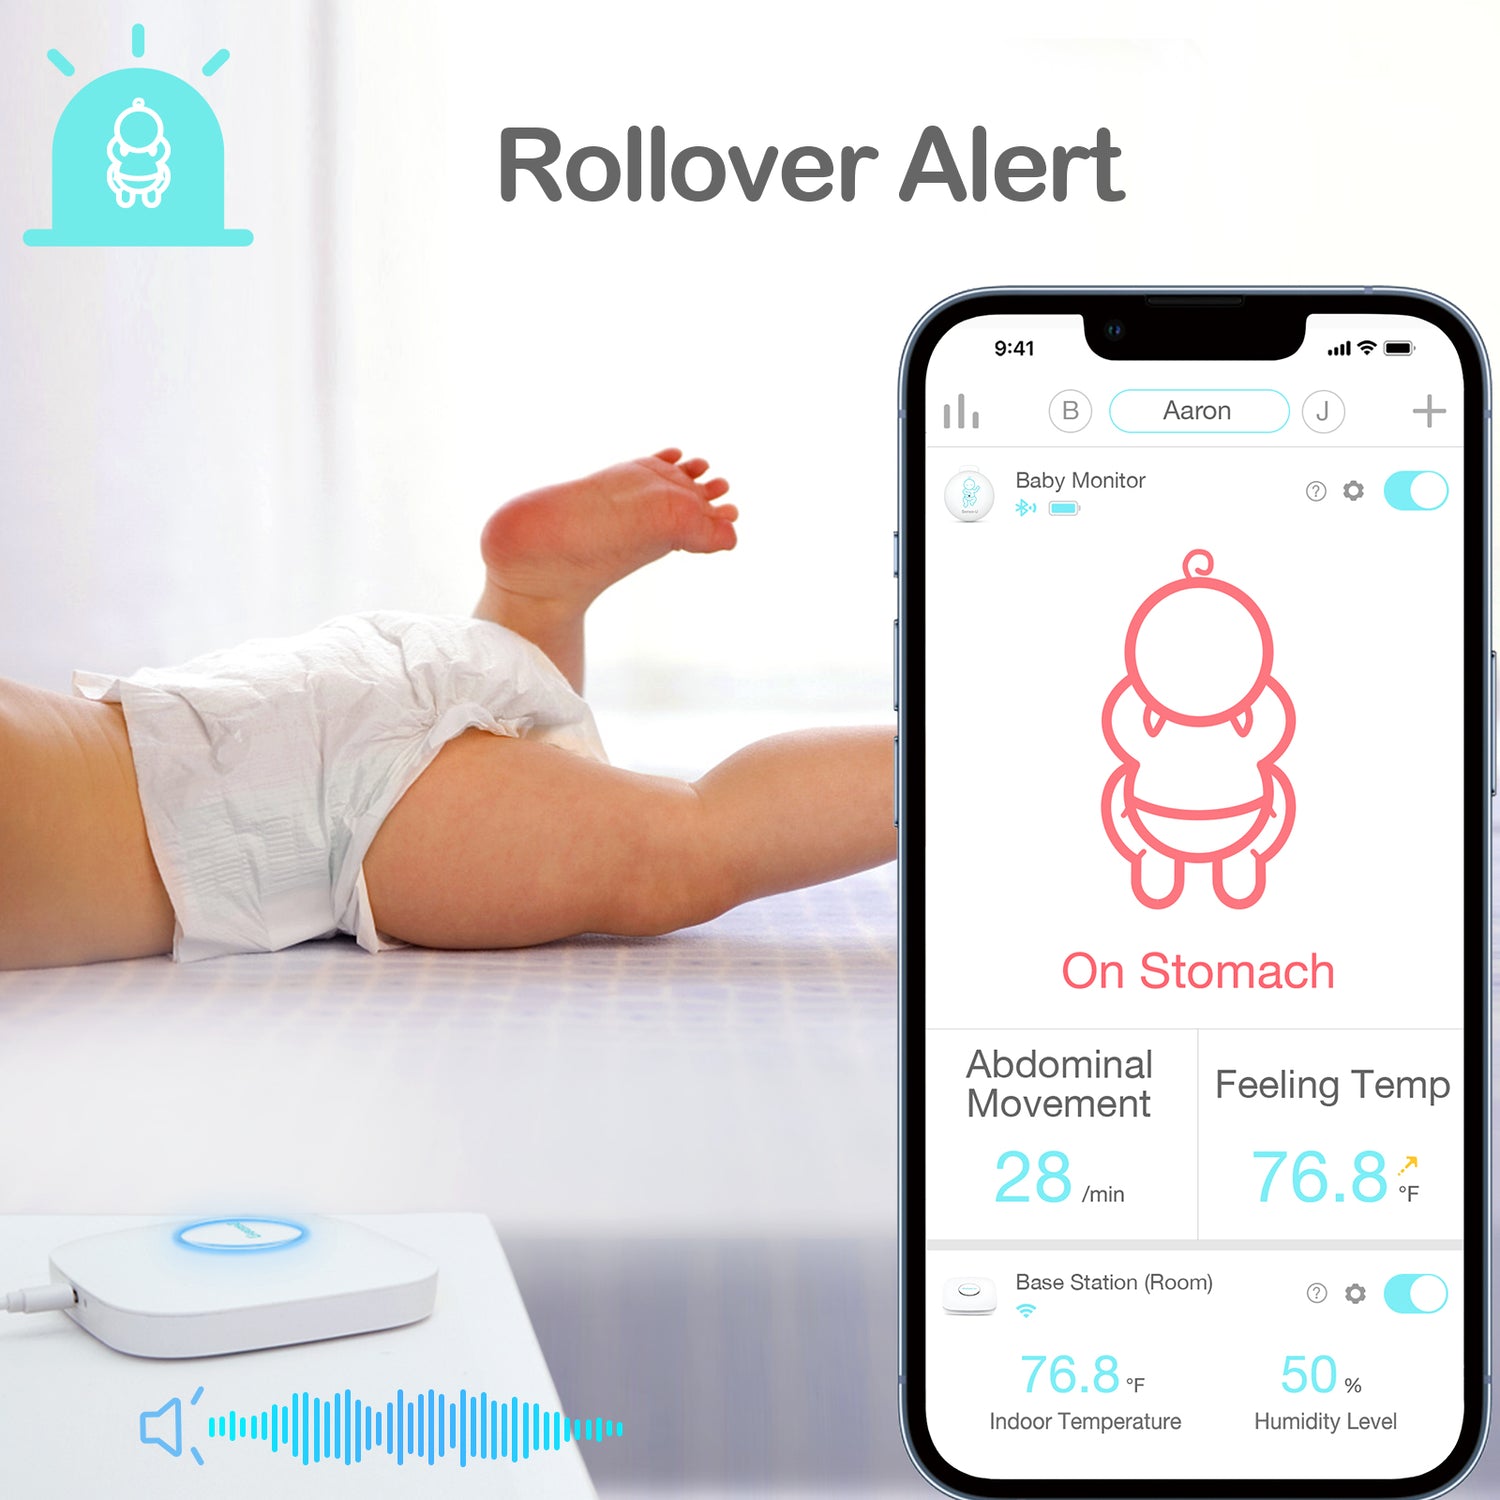 Sense-U Baby Monitor 3: Breathing, Rollover, Temp (FSA/HSA Approved)